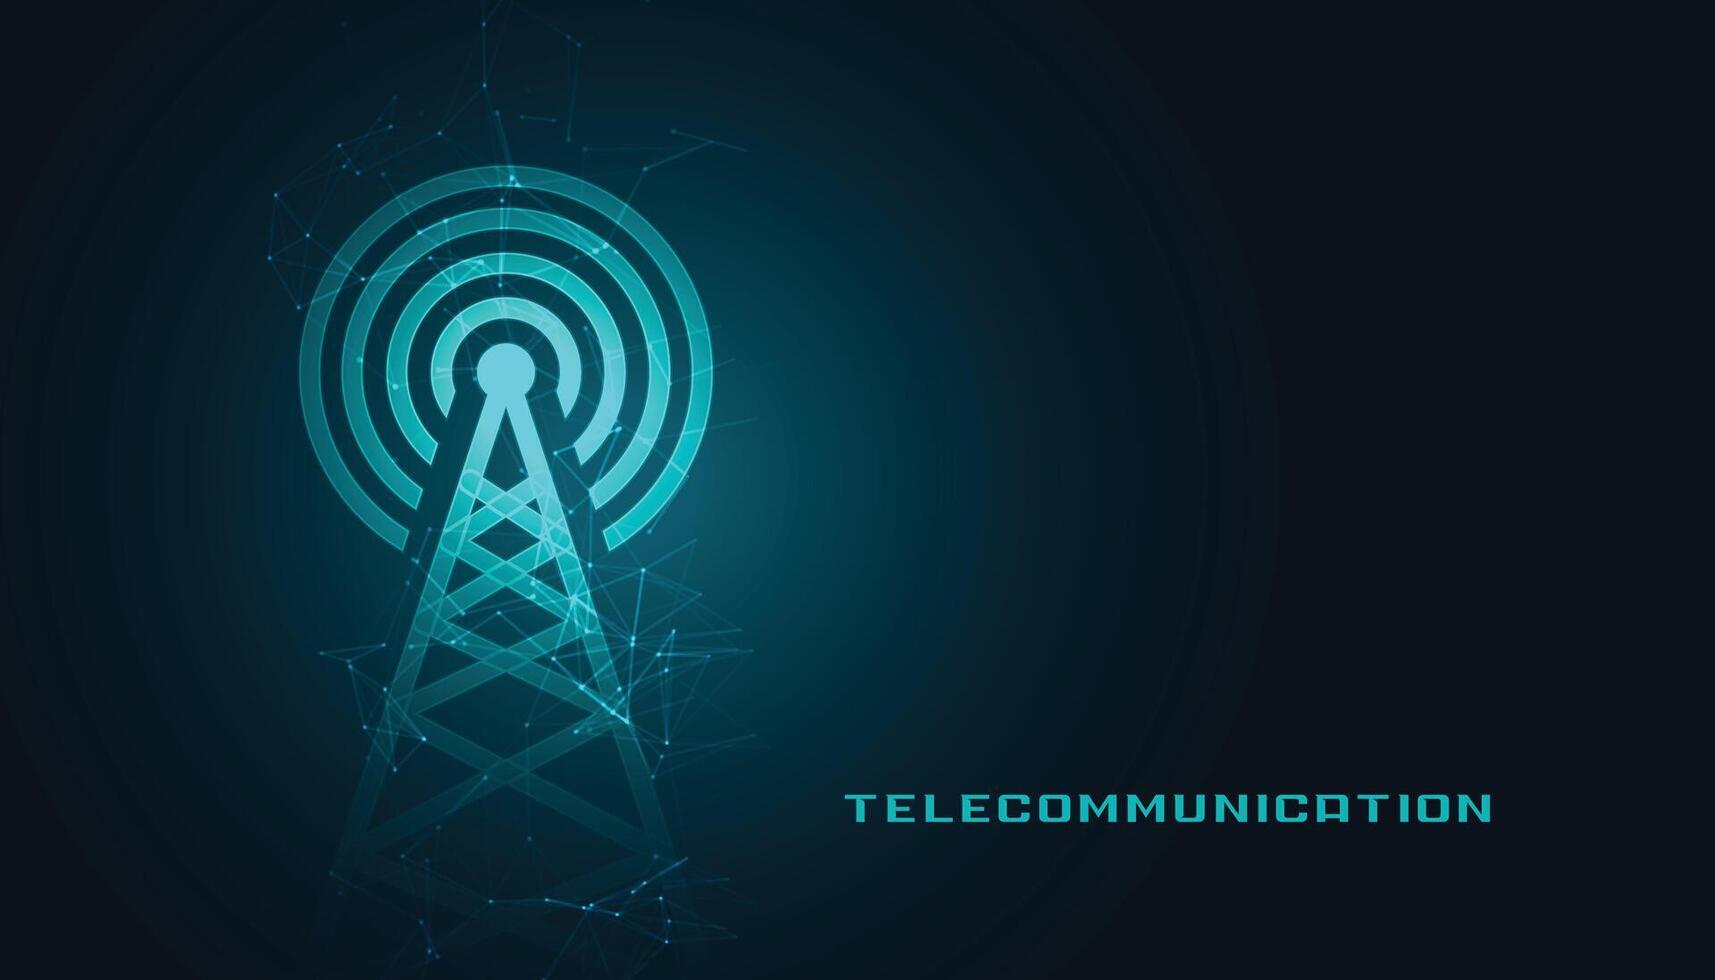 mobile telecommunication digital tower background design vector